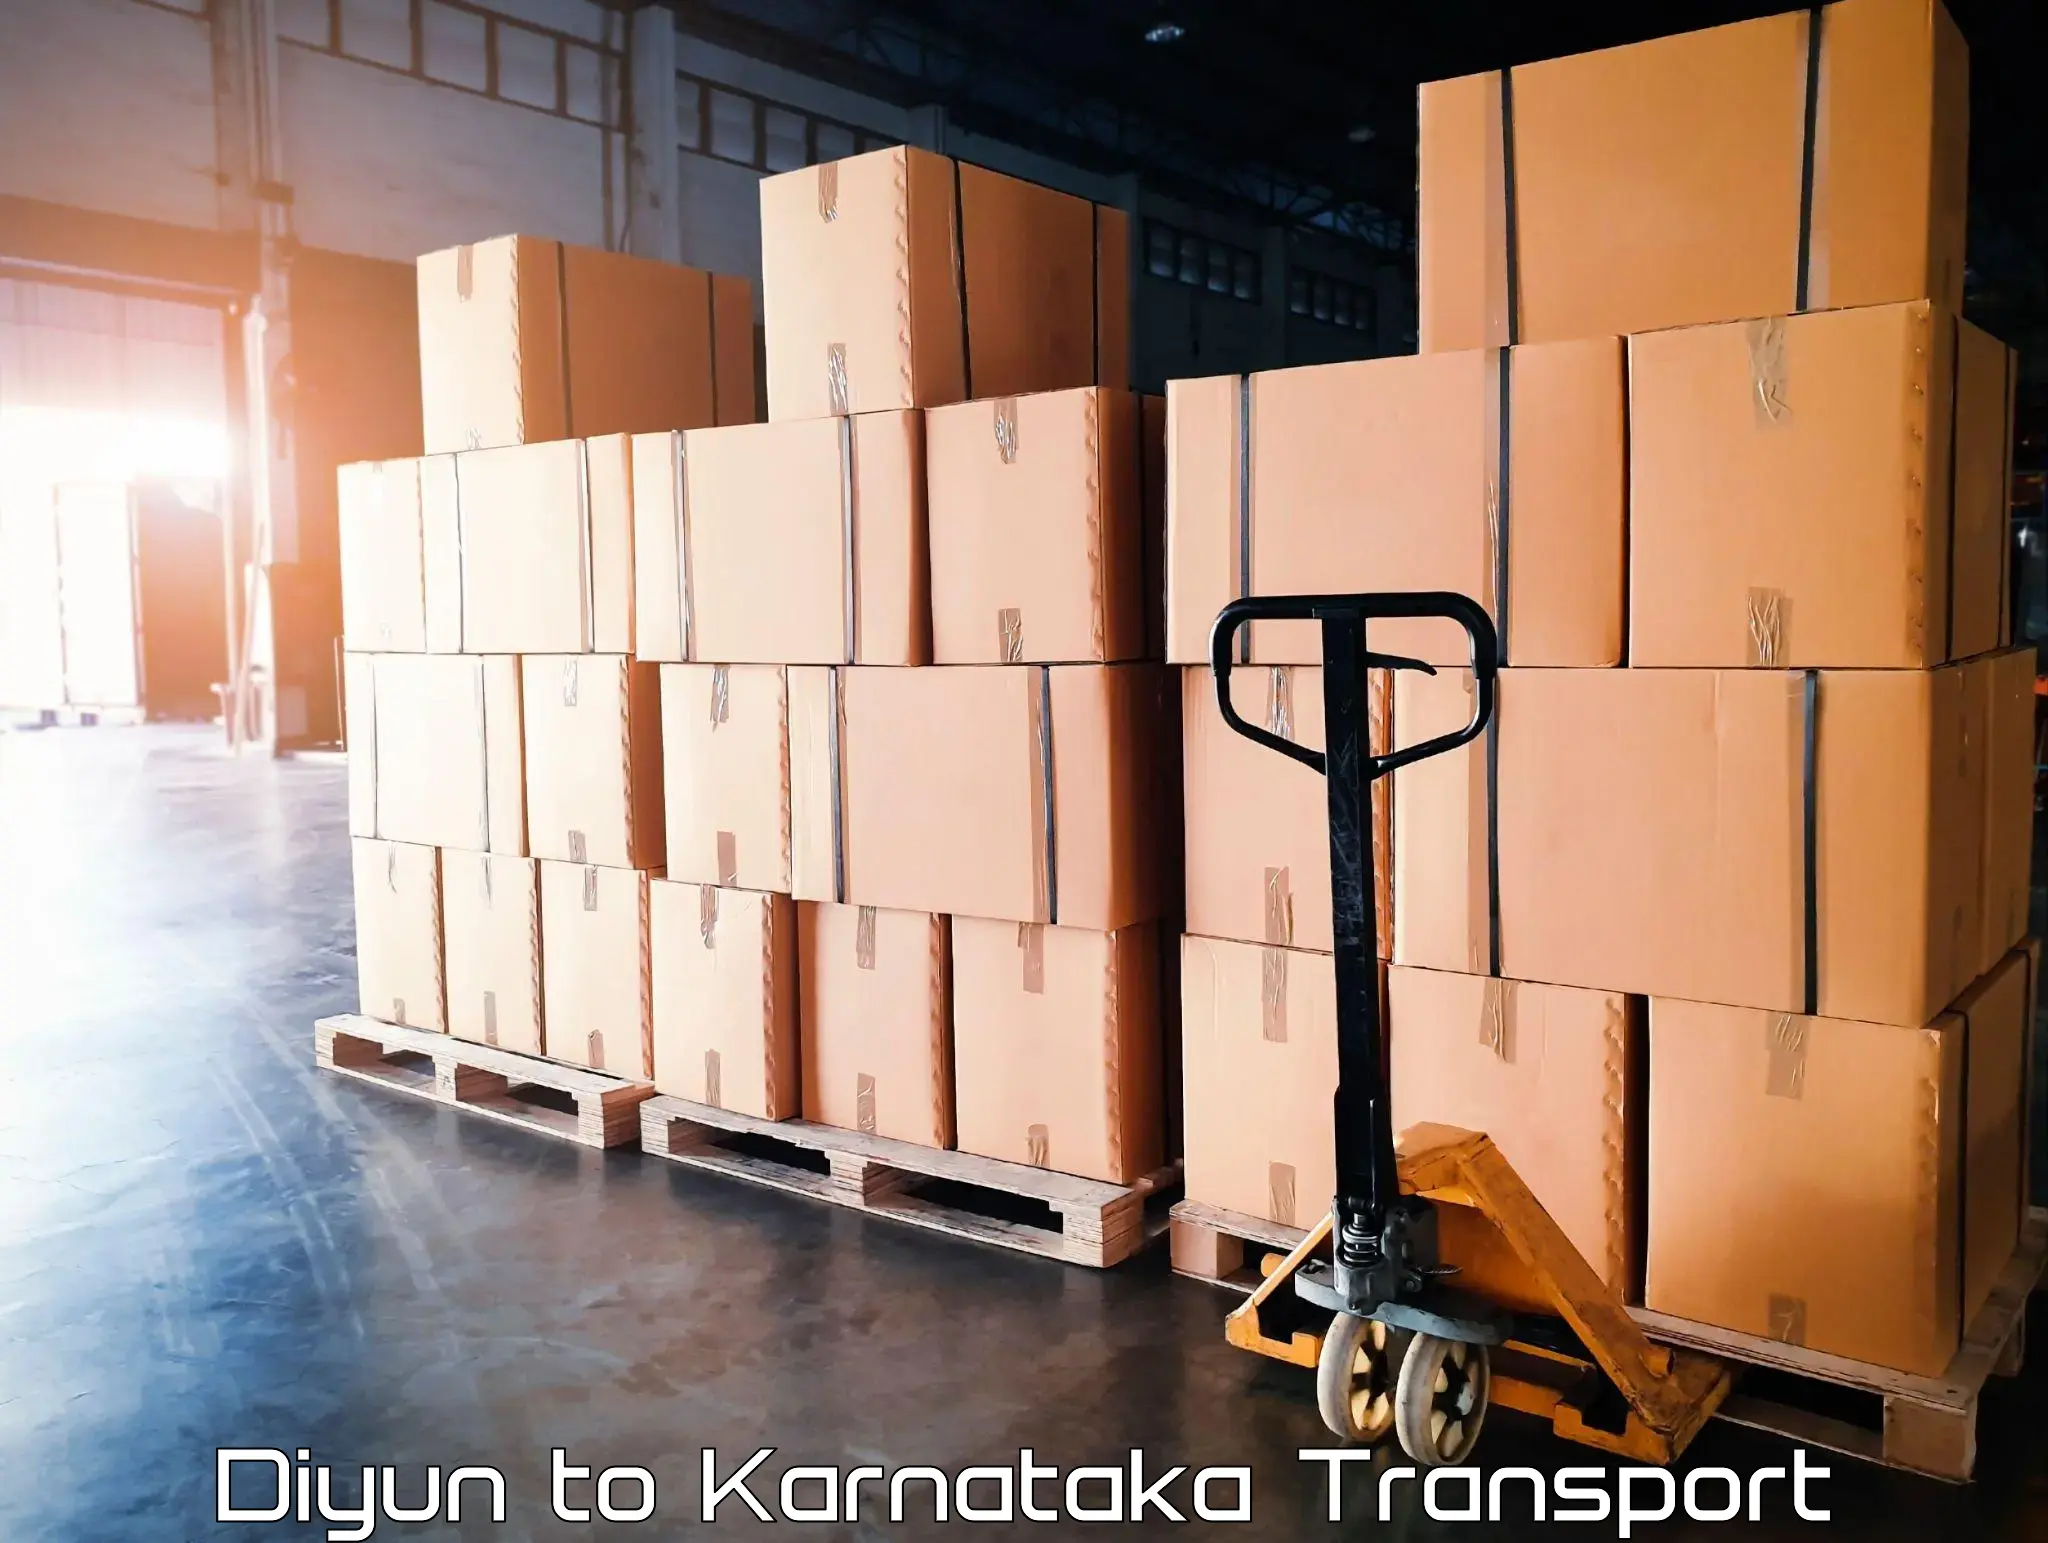 Sending bike to another city Diyun to Karnataka